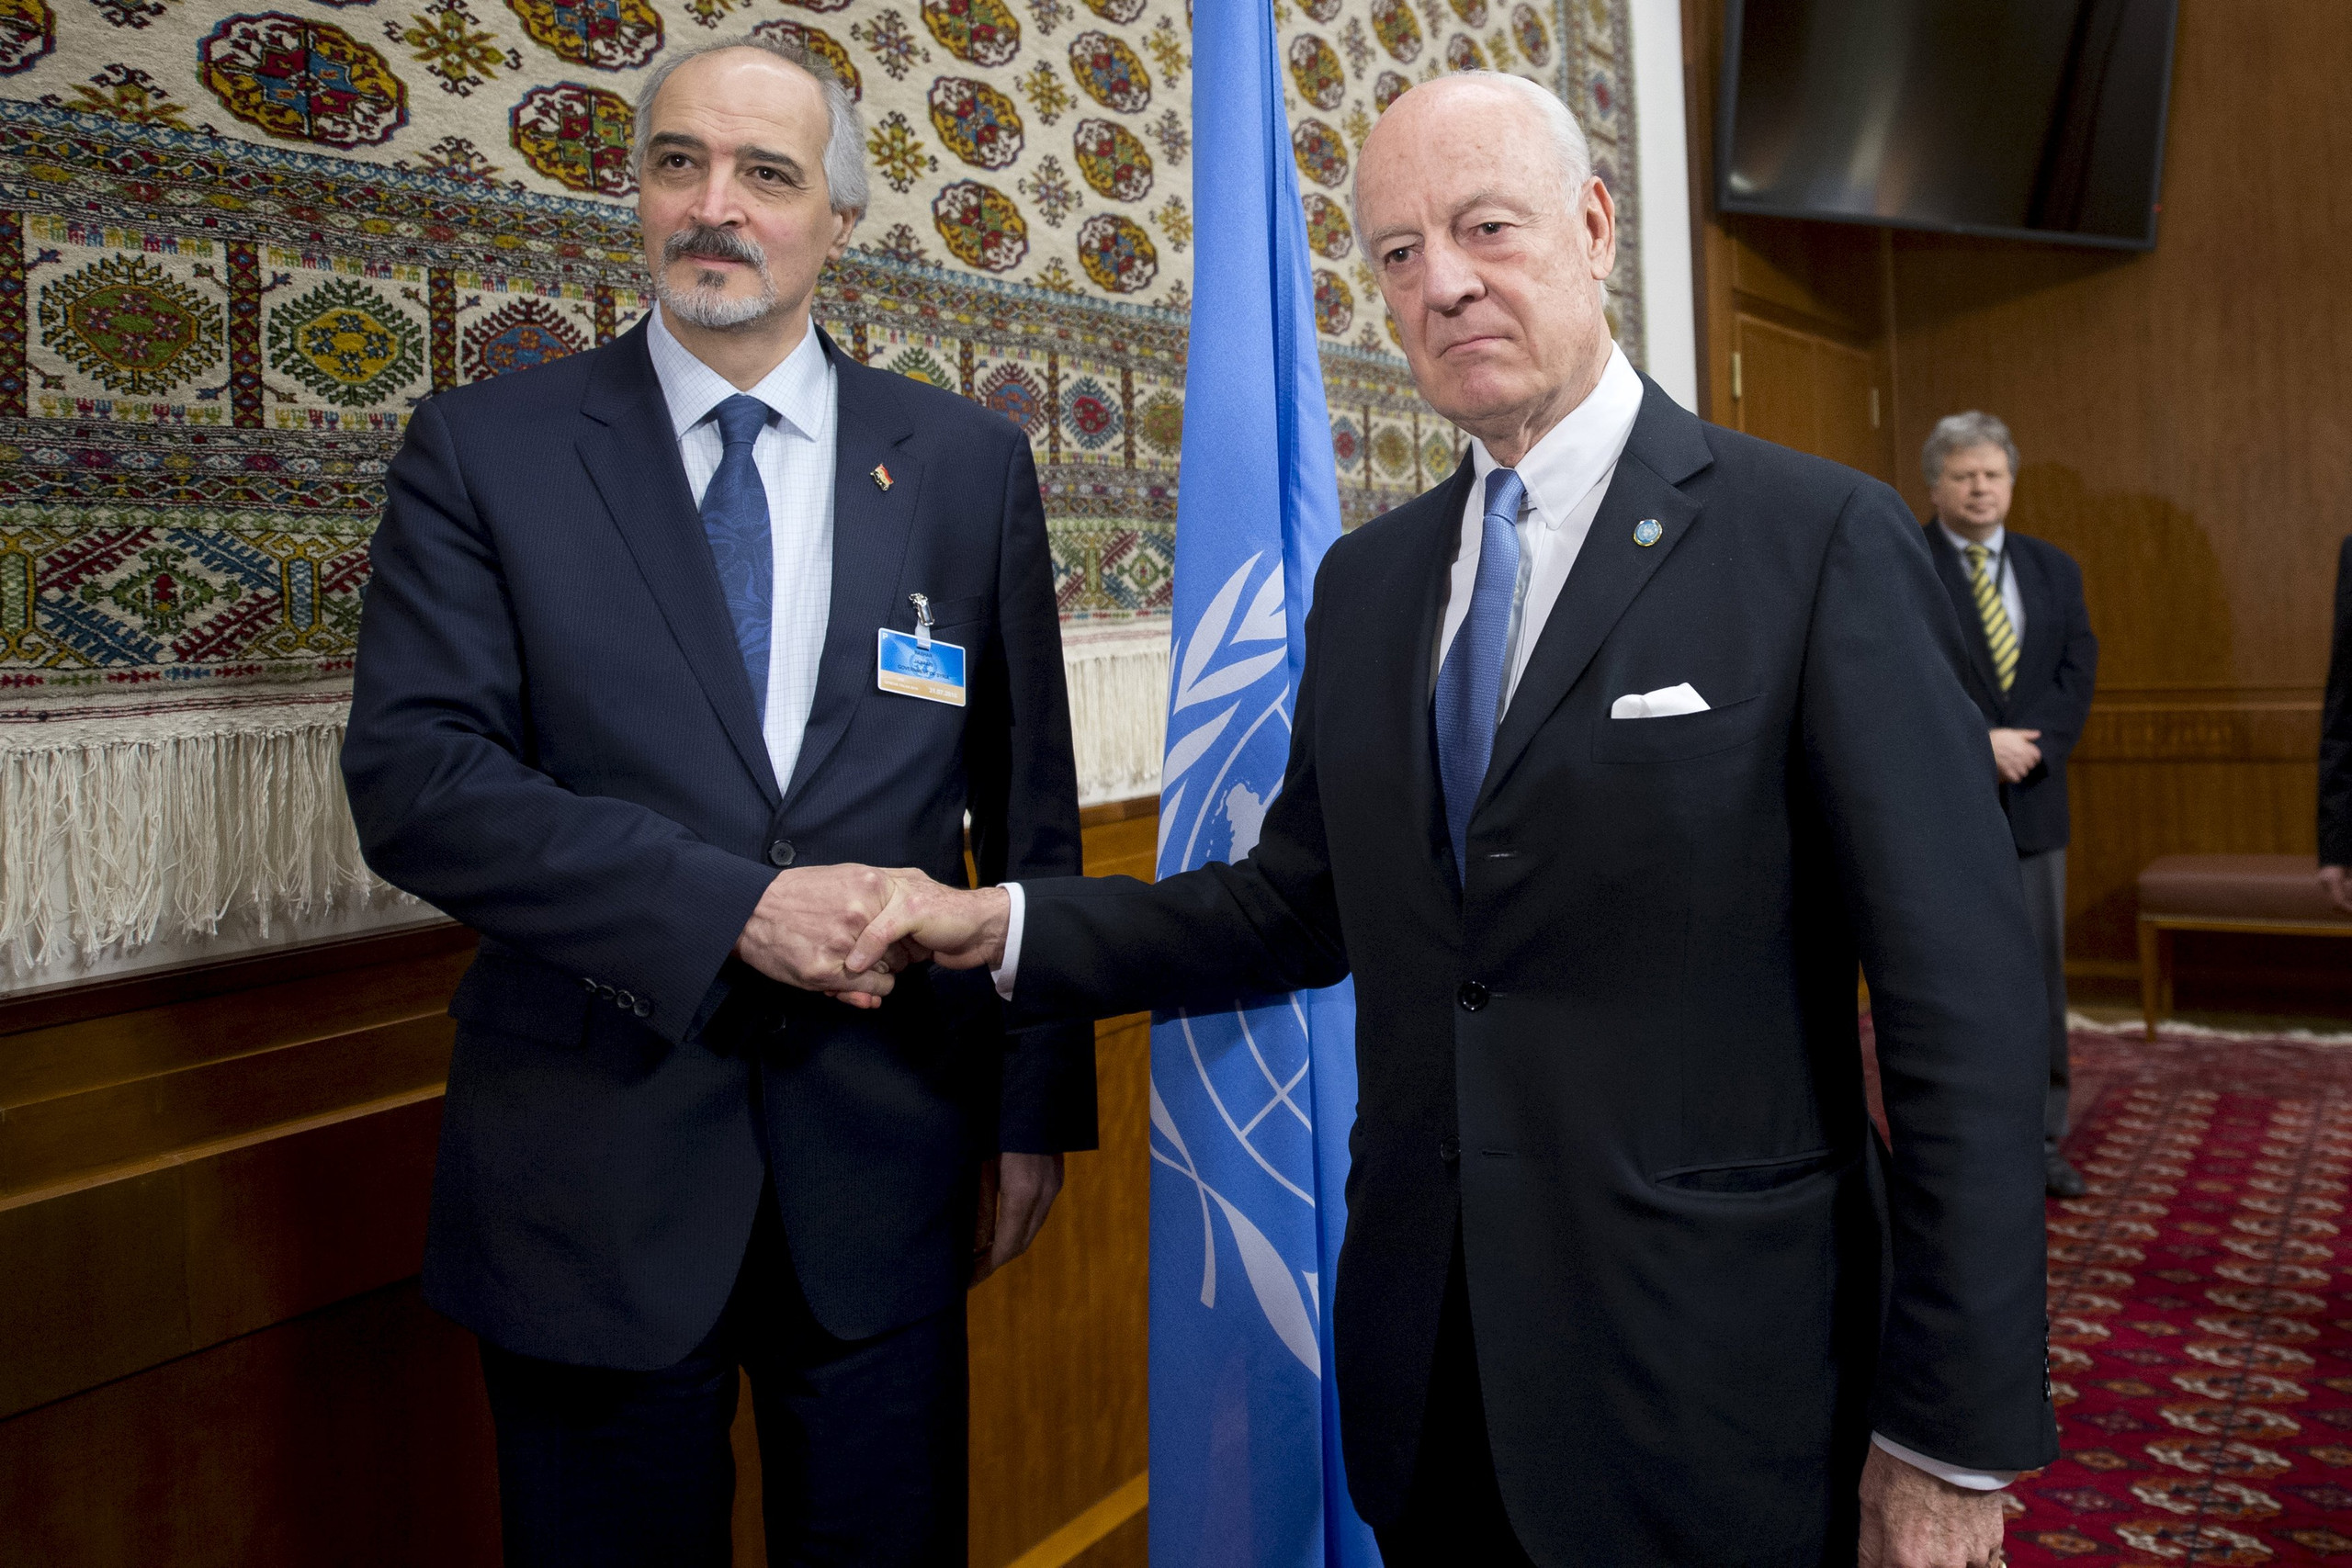 U.N. envoy Staffan de Mistura shakes hands with Syria’s Ambassador to UN Bashar al Jaafari during the Syria peace talks in Geneva, Switzerland